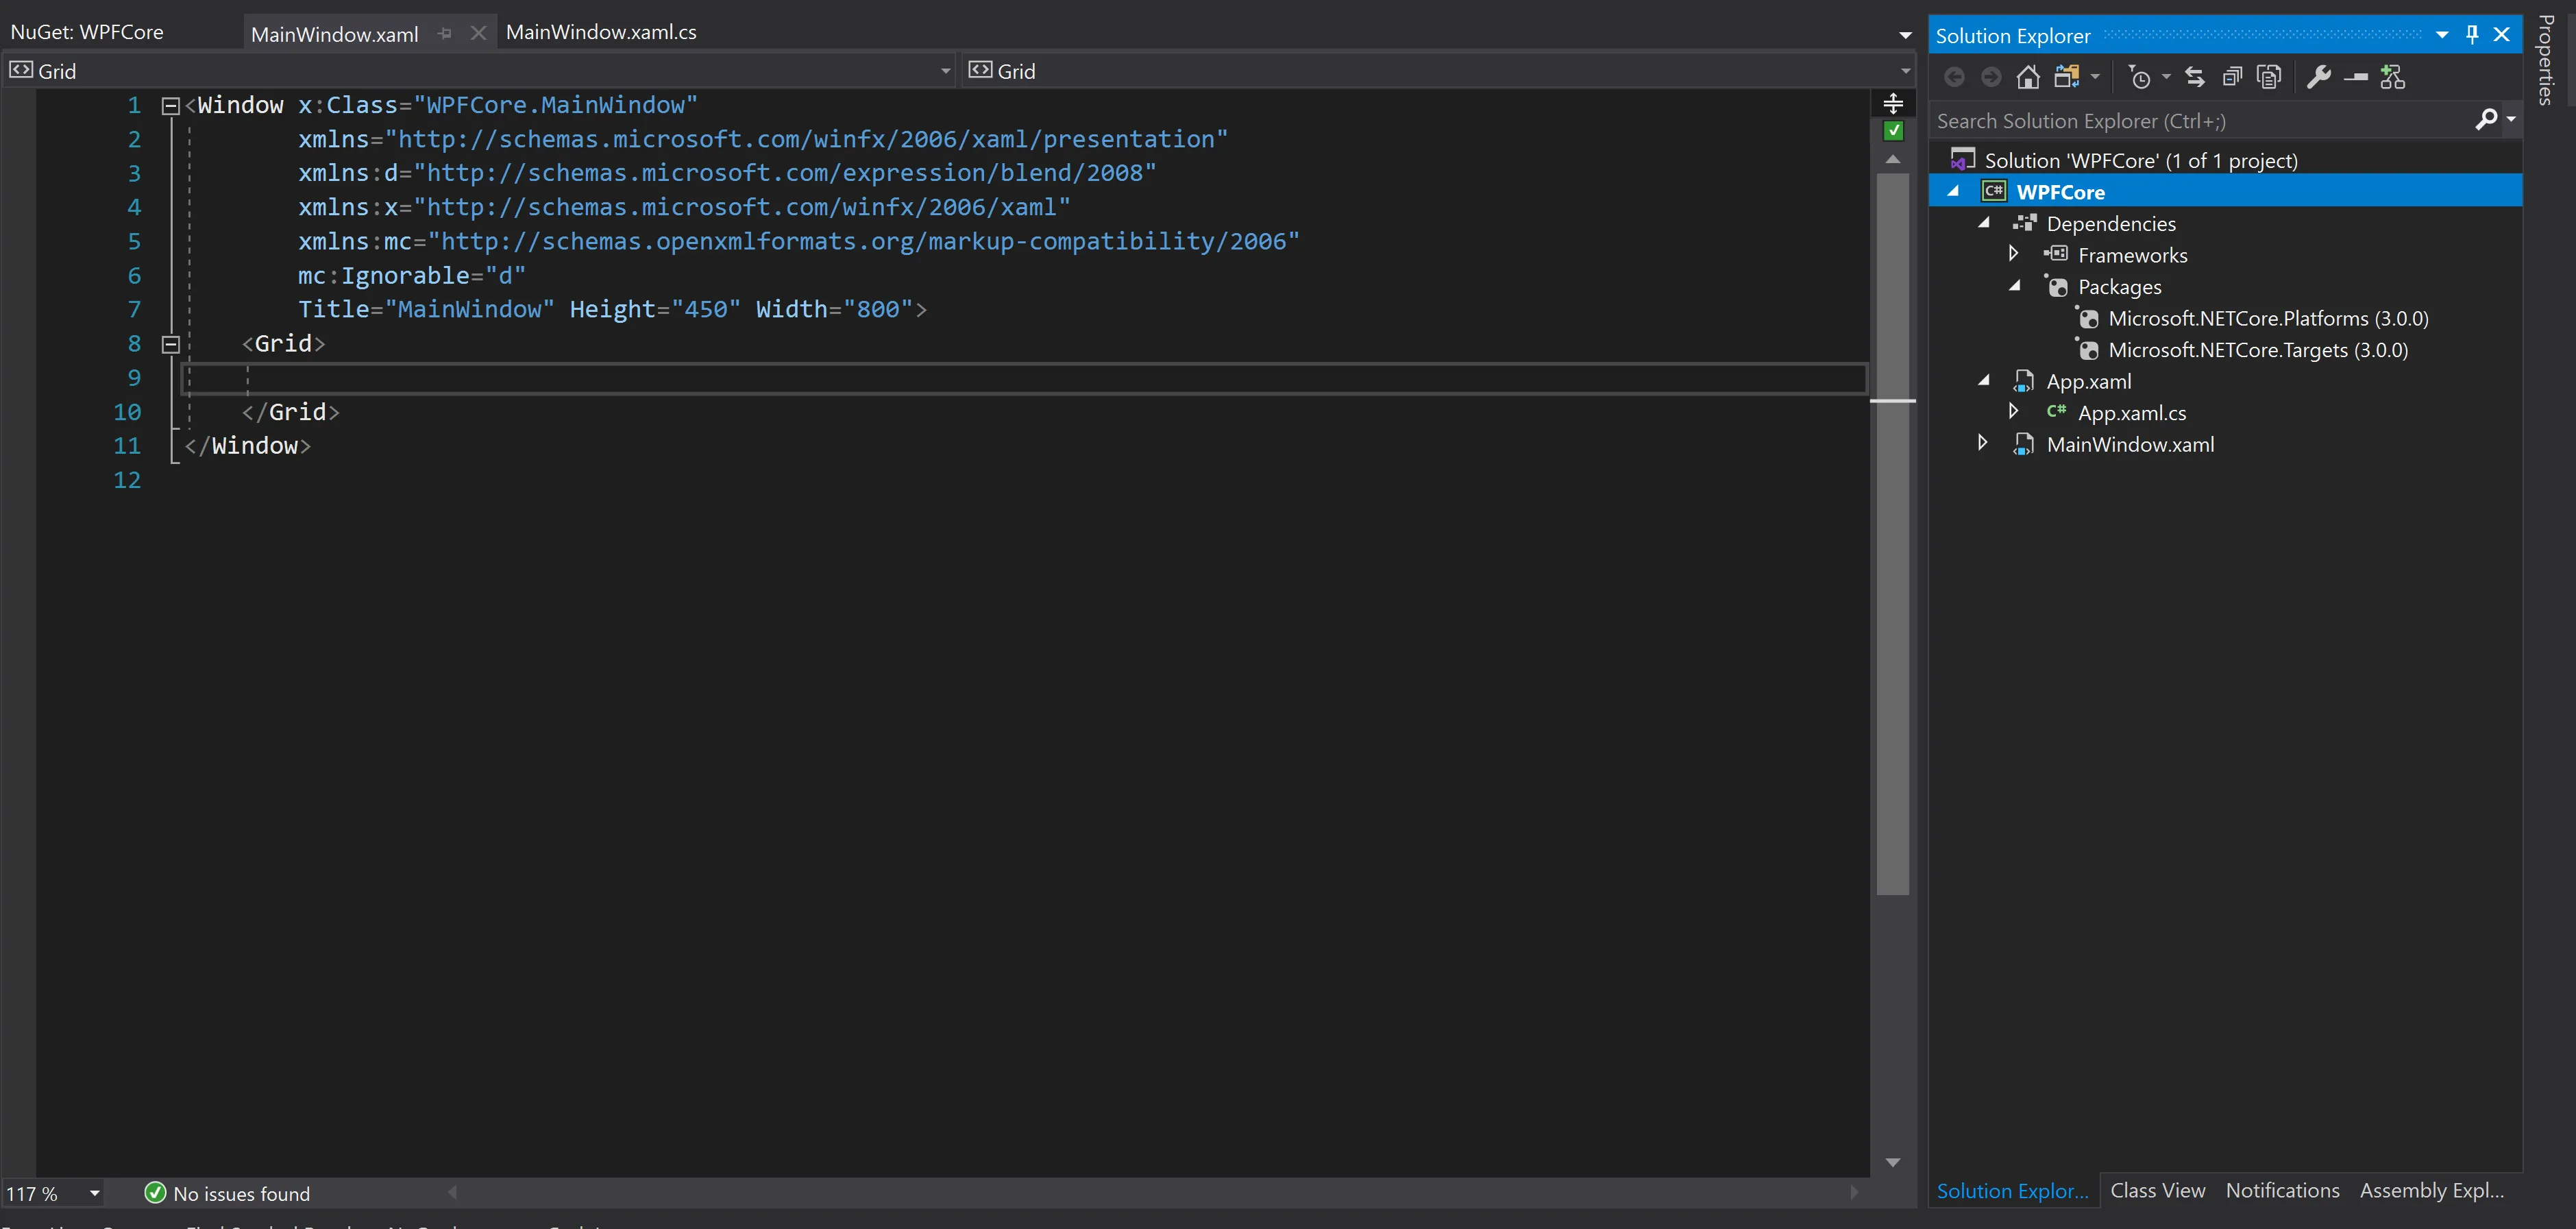 Image from Visual Studio Environment